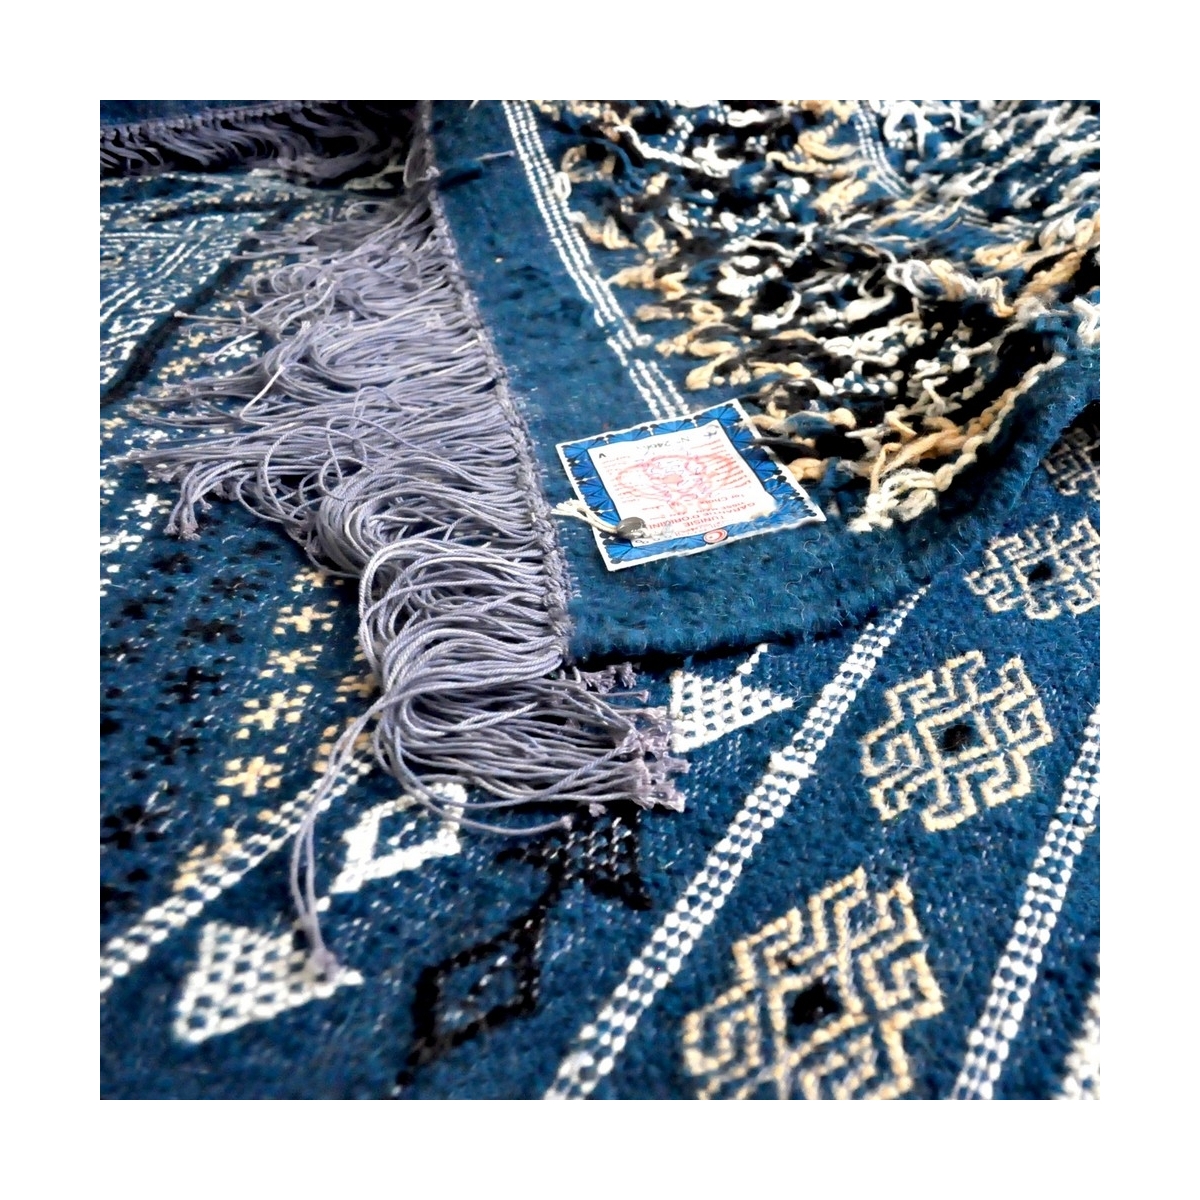 Berber carpet Large Rug Margoum Baraka 200x300 Blue (Handmade, Wool, Tunisia) Tunisian margoum rug from the city of Kairouan. Re